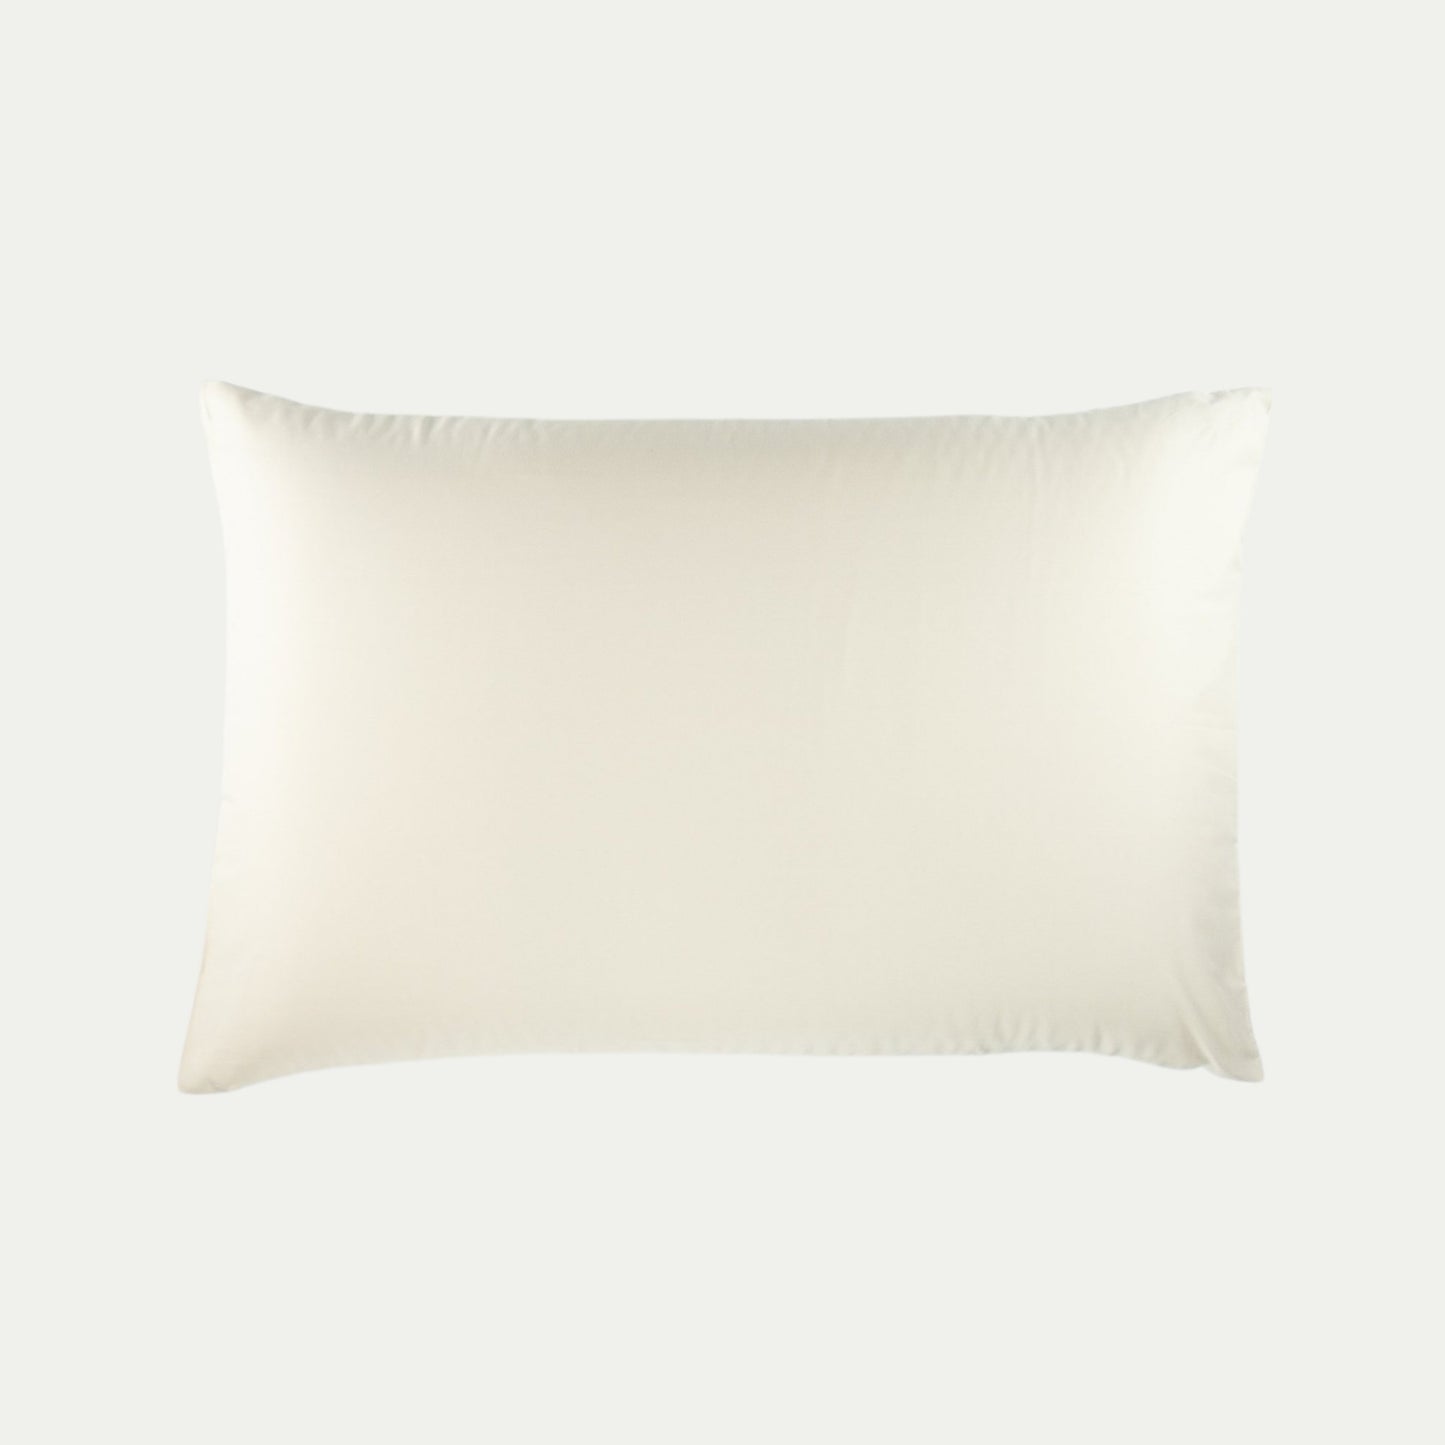 Organic cotton pillowcase in egg shell white